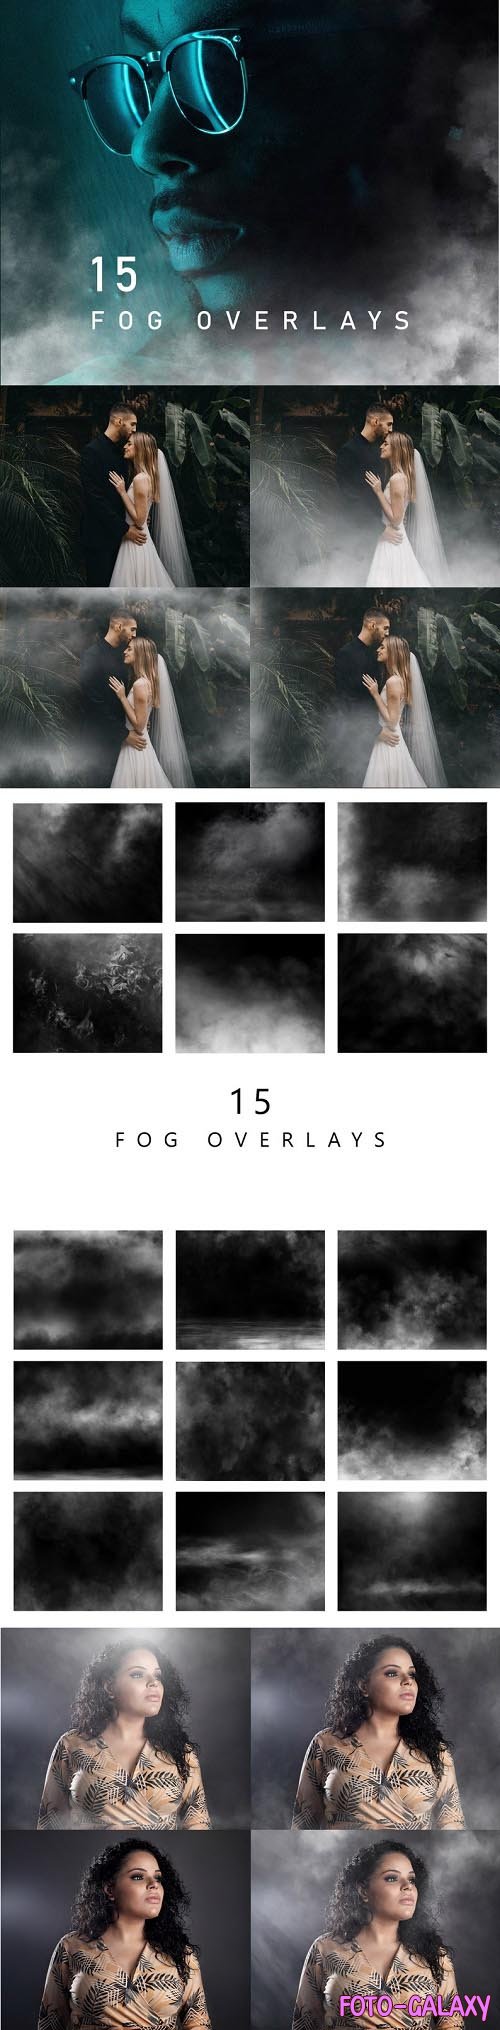 15 Fog Overlays, Smoke Overlays, Free Gif Animated Photoshop Action